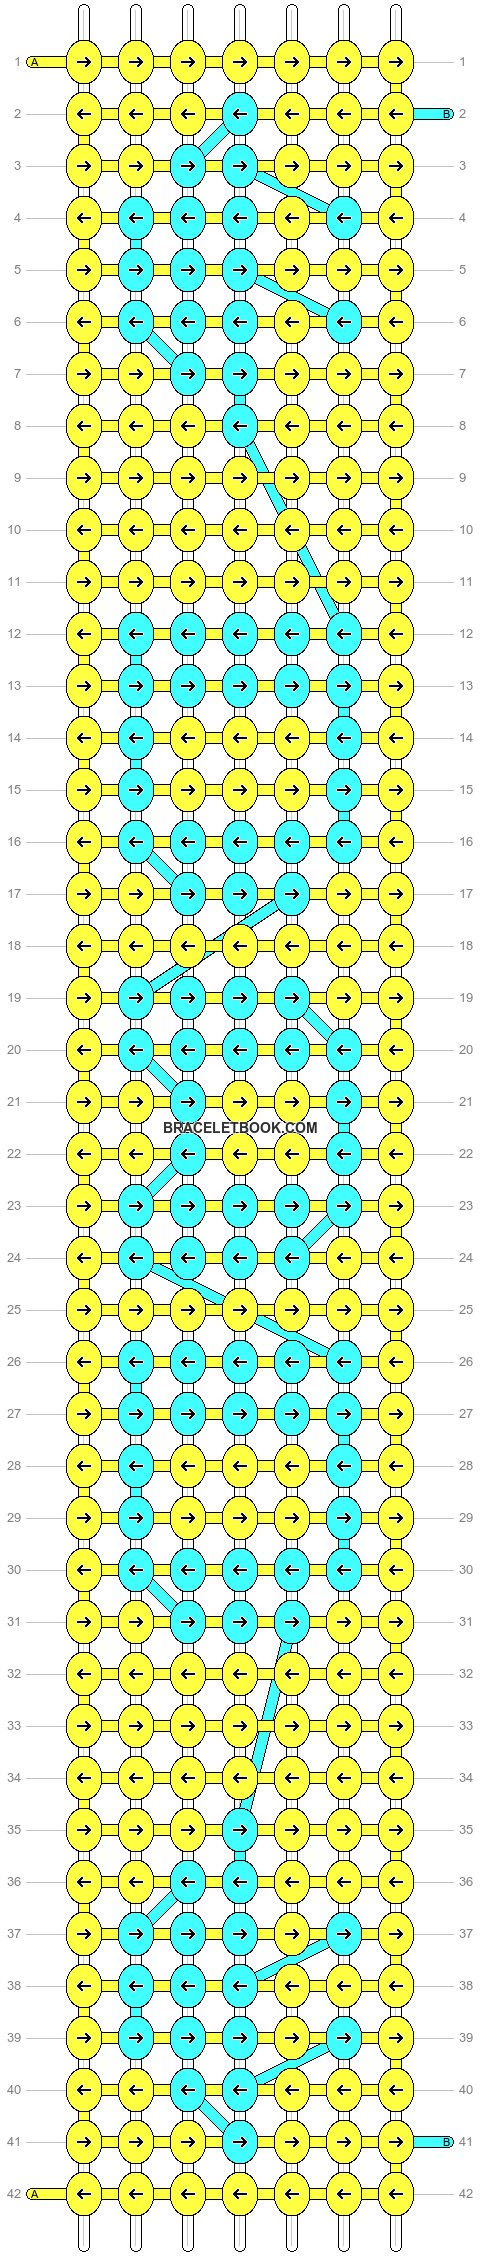 Alpha pattern #5788 variation #34021 pattern